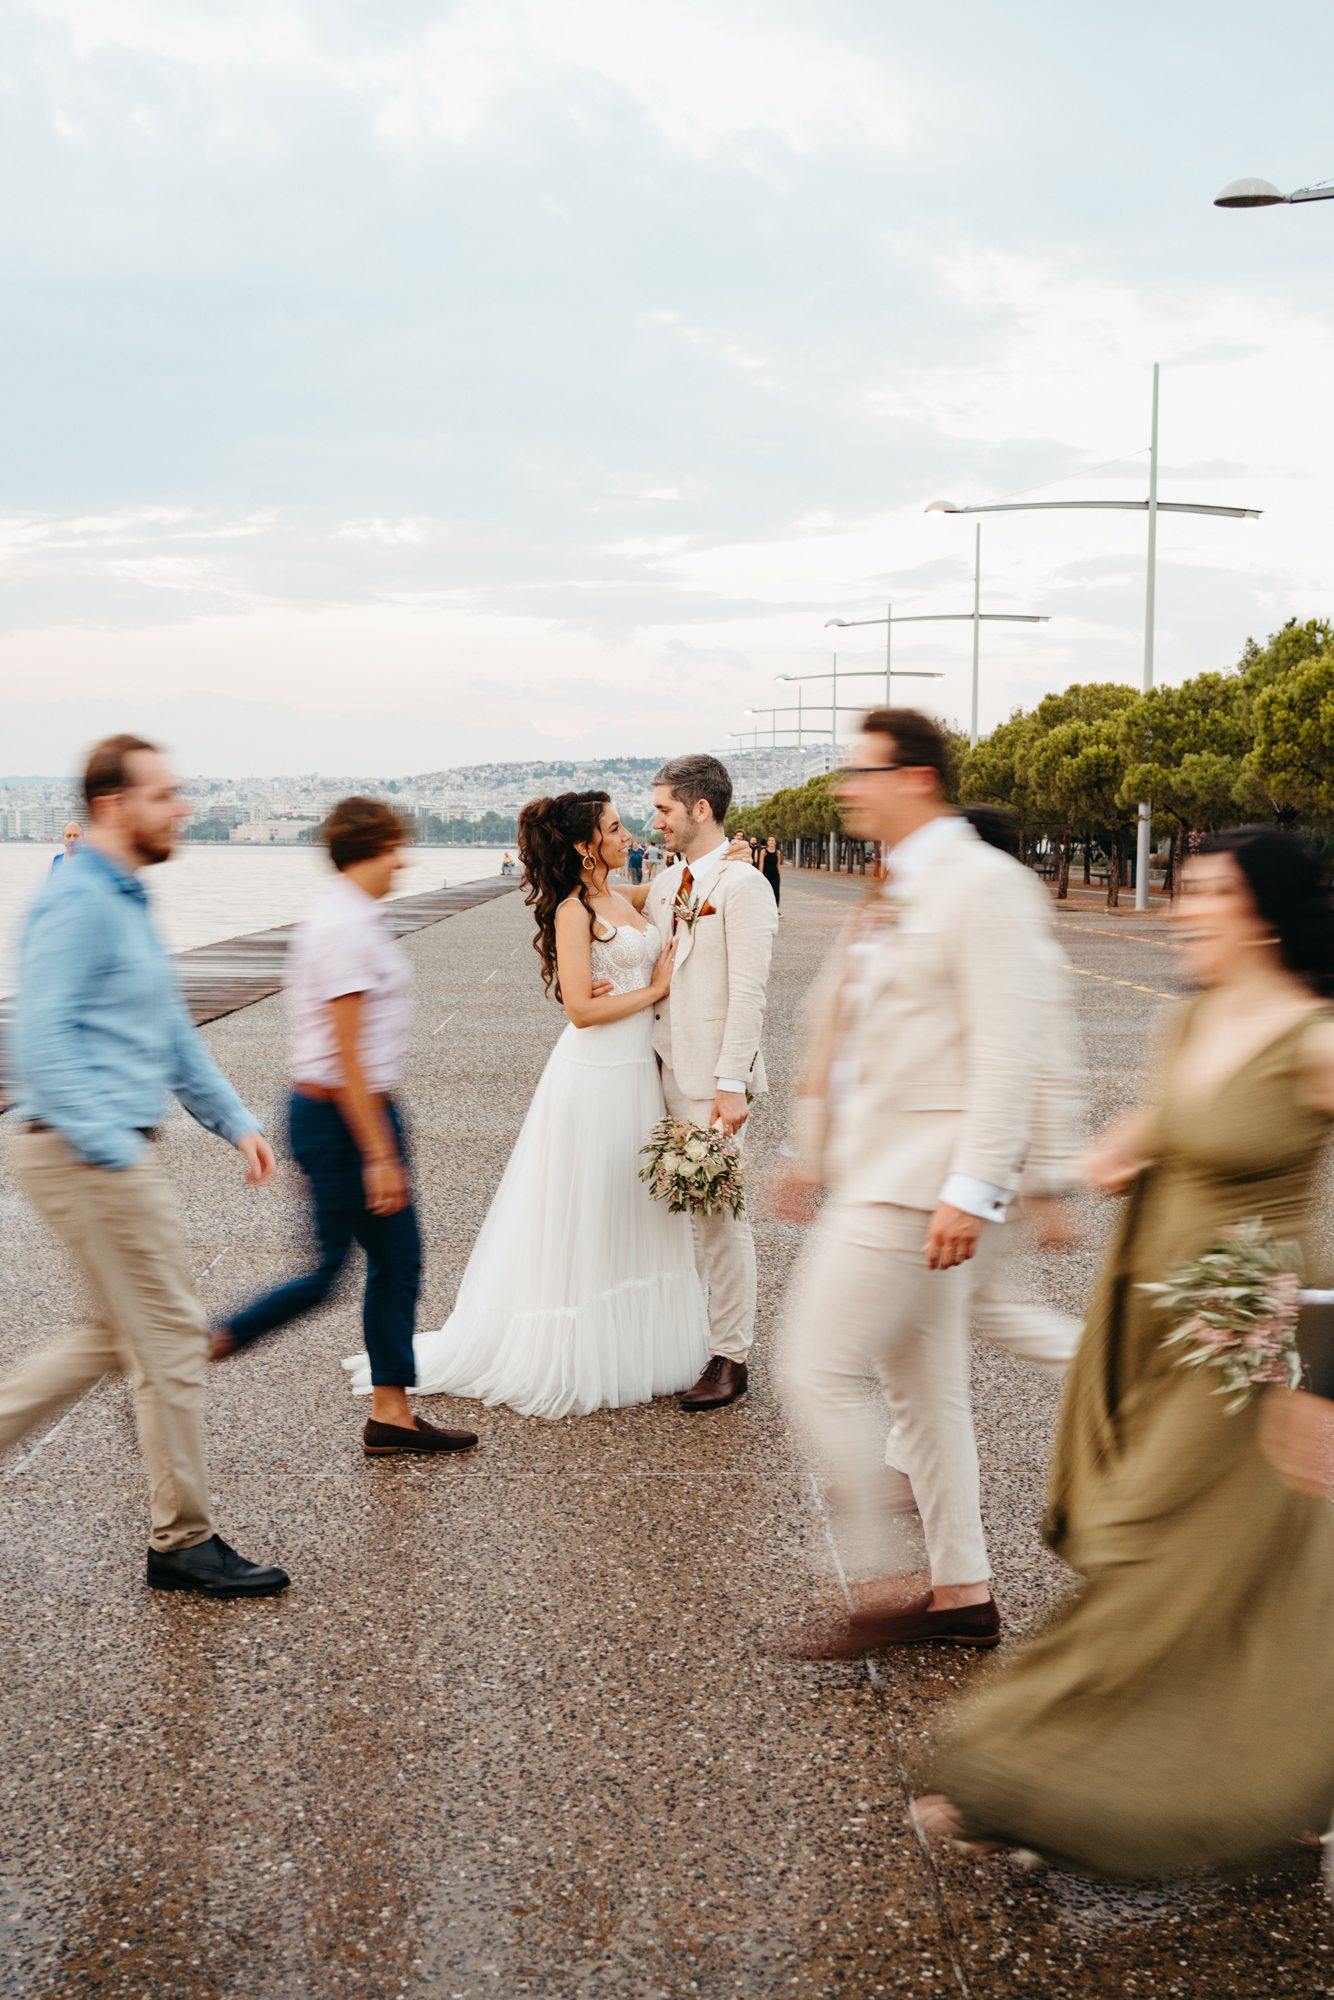 Choosing the Perfect Wedding Photographer